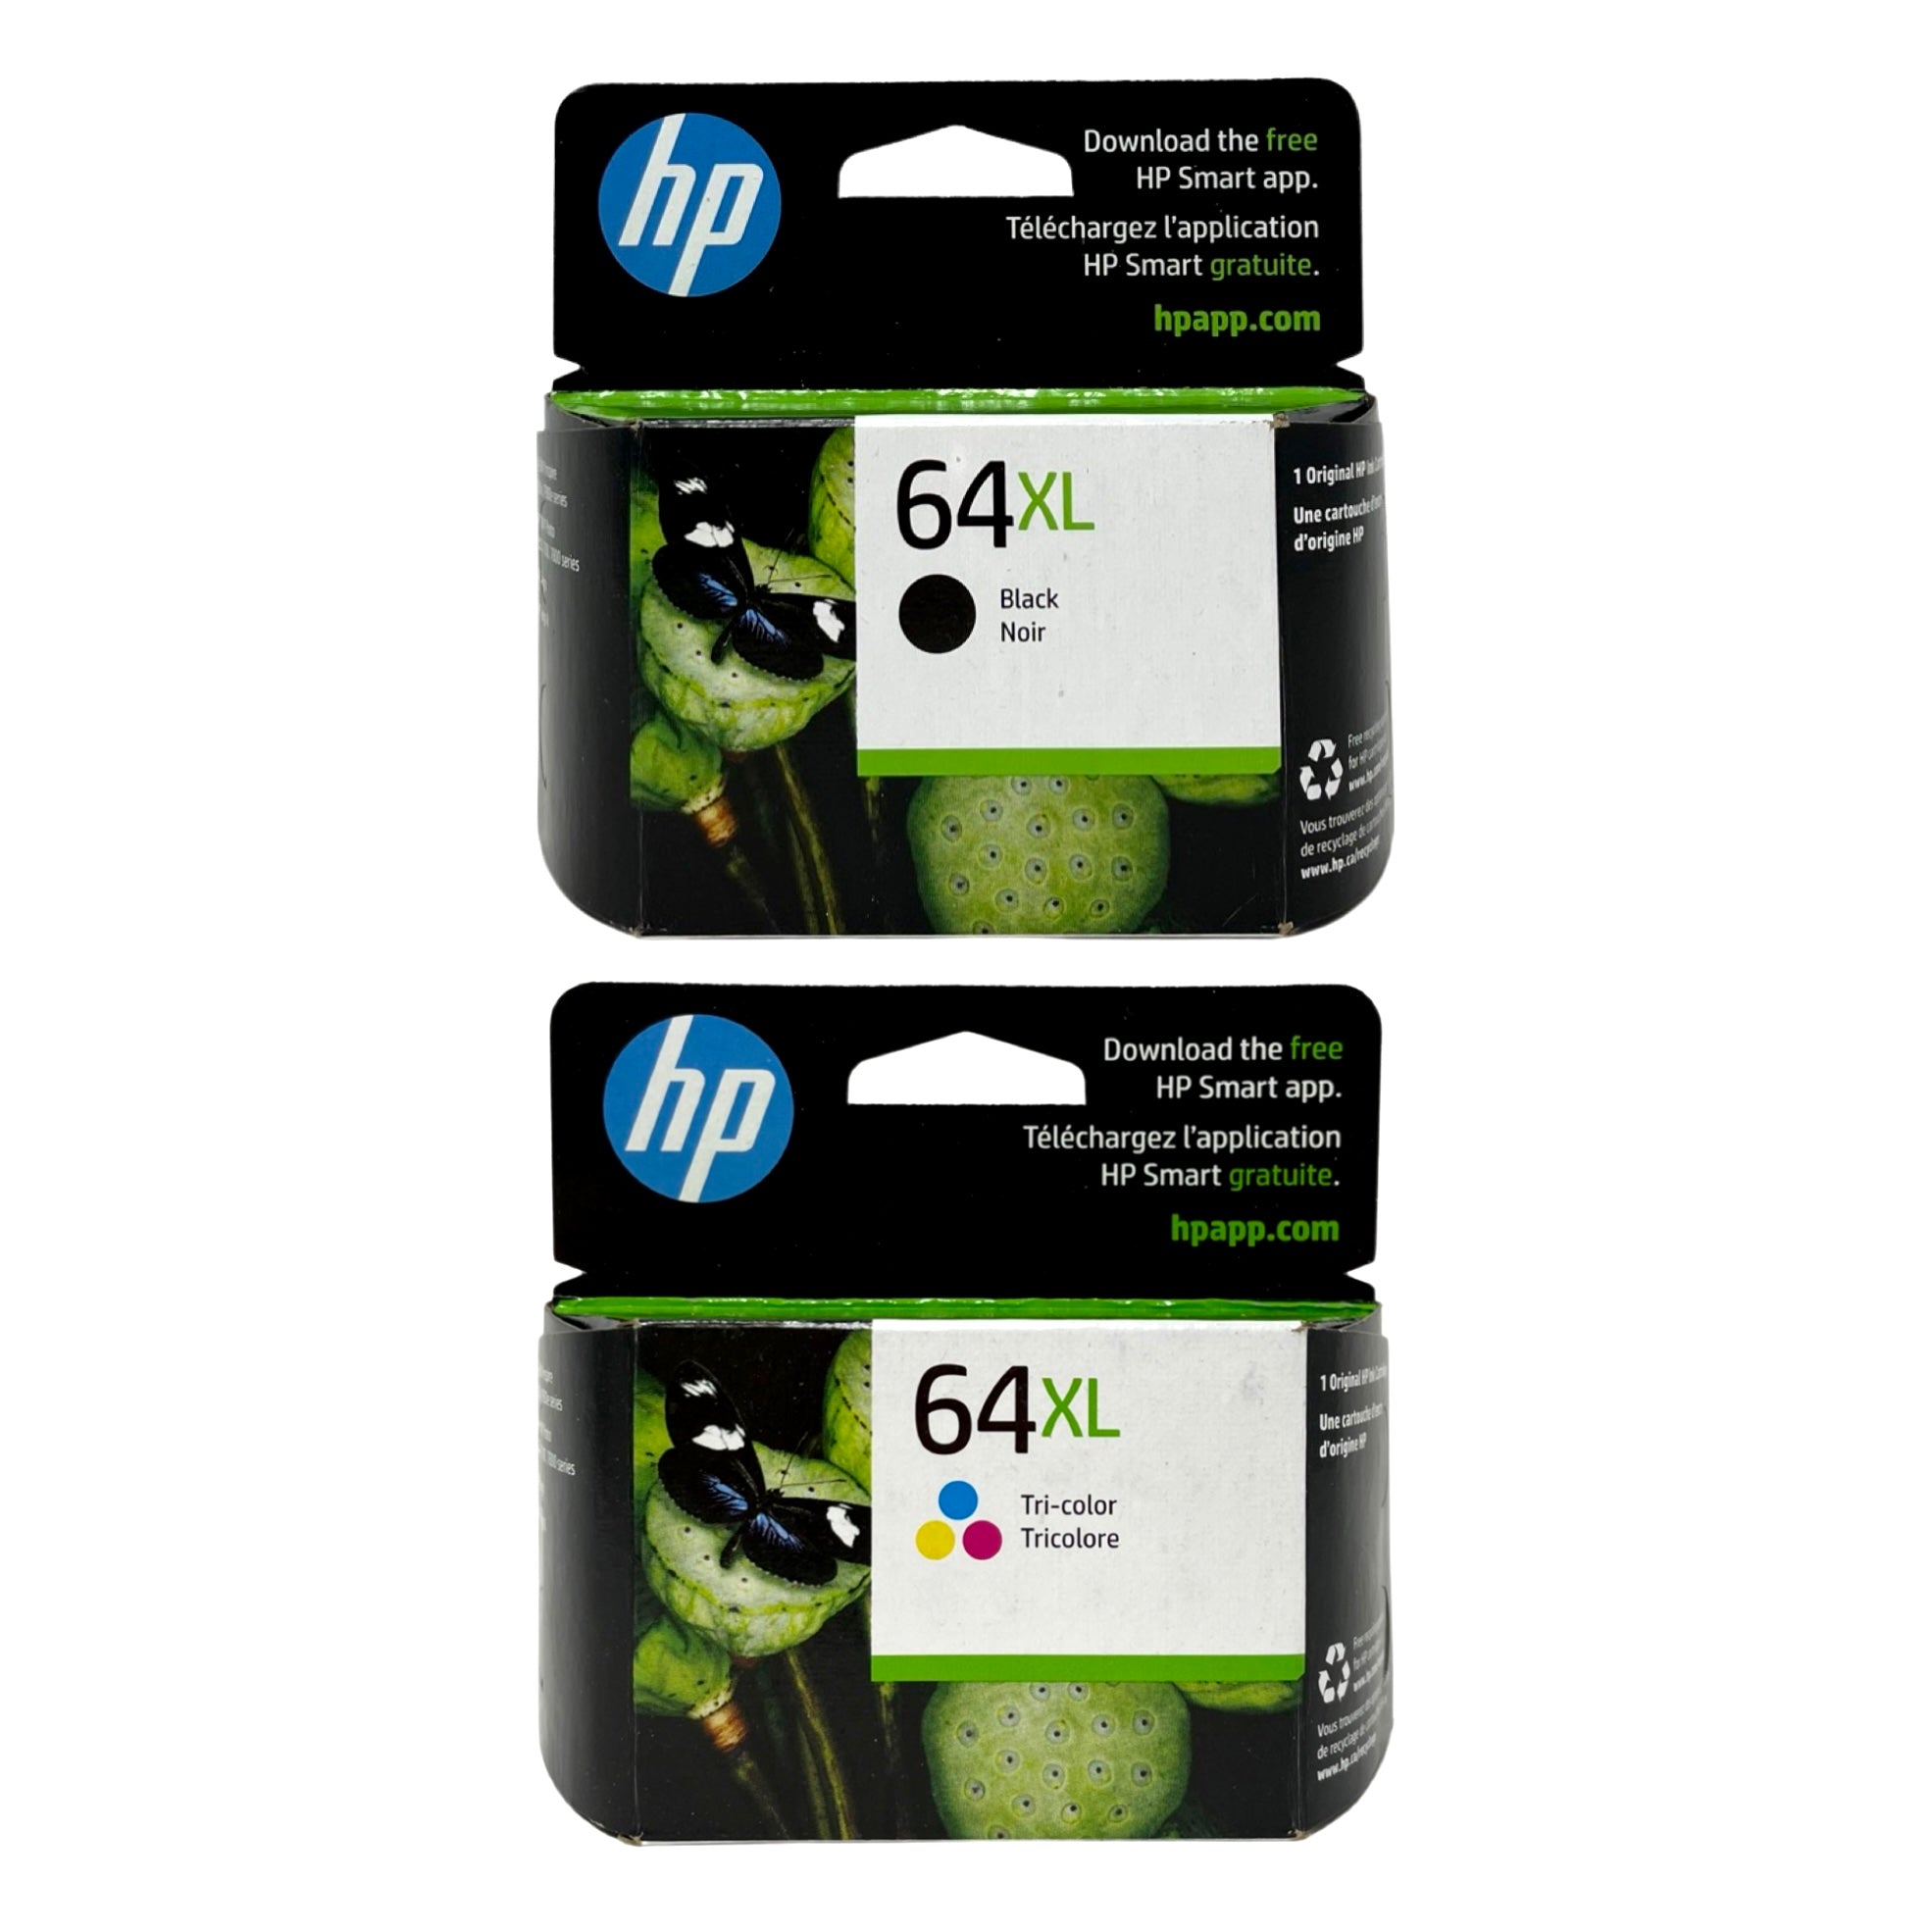 HP 64XL High Yield Ink 2 Pack - Black Tri Color - Original HP LaserJet Ink Cartridges